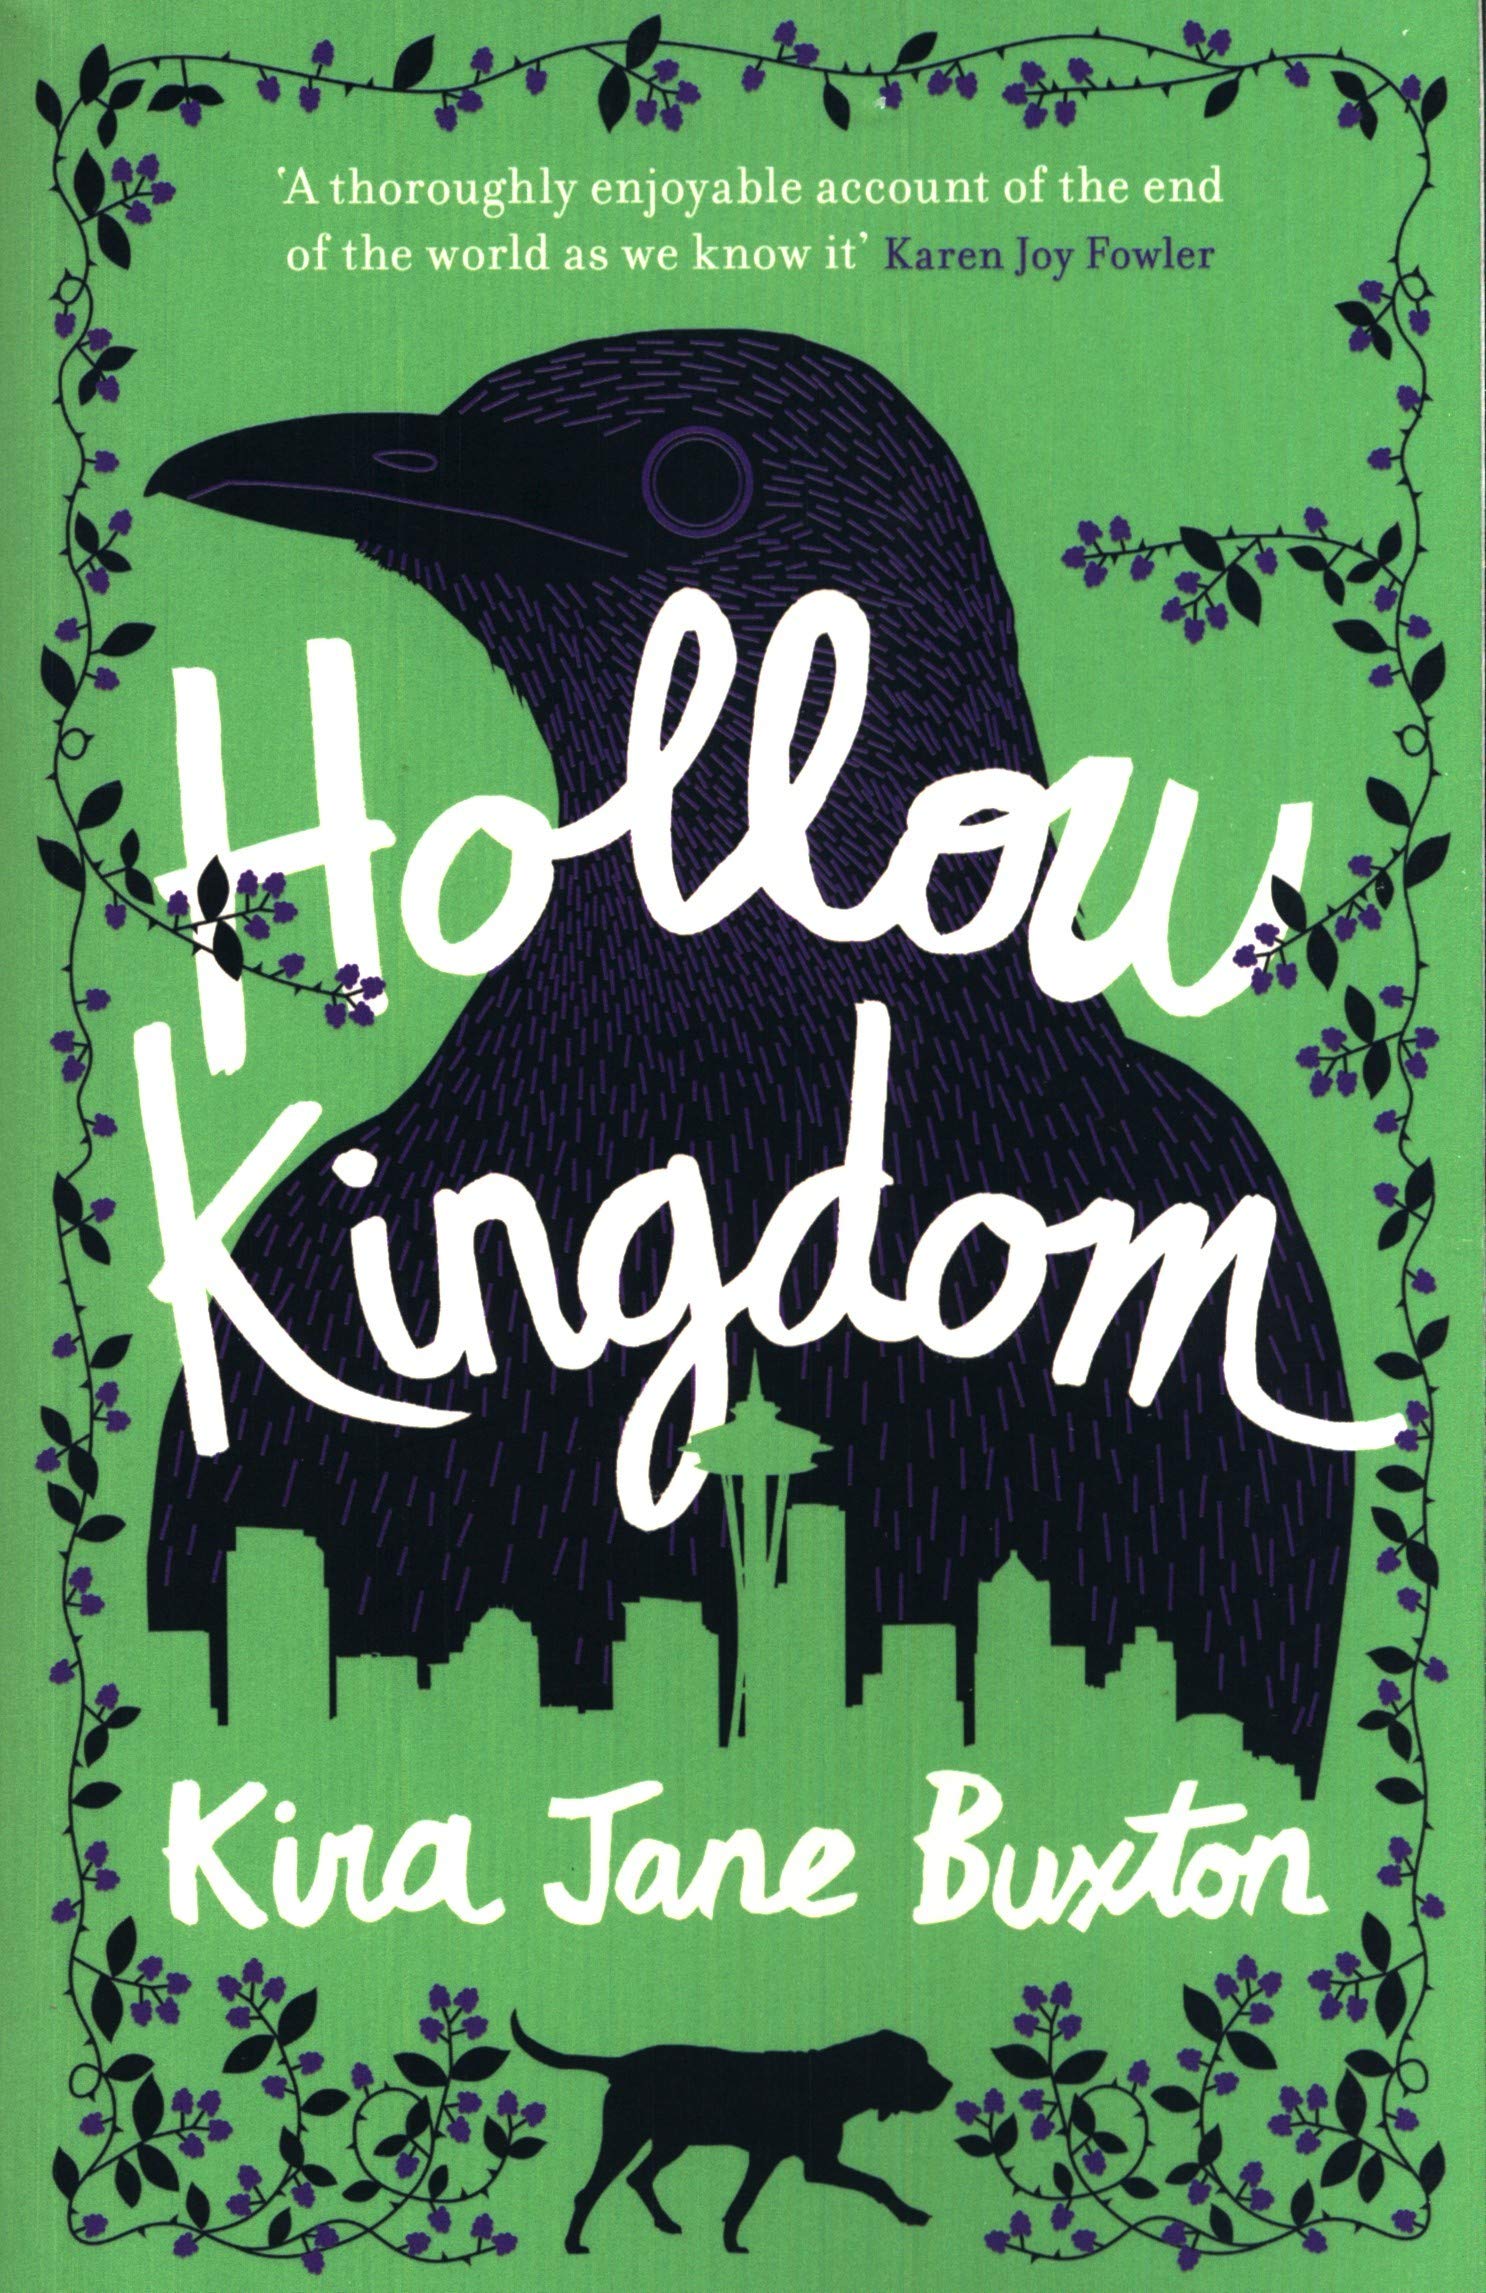 Hollow Kingdom | Kira Jane Buxton image3